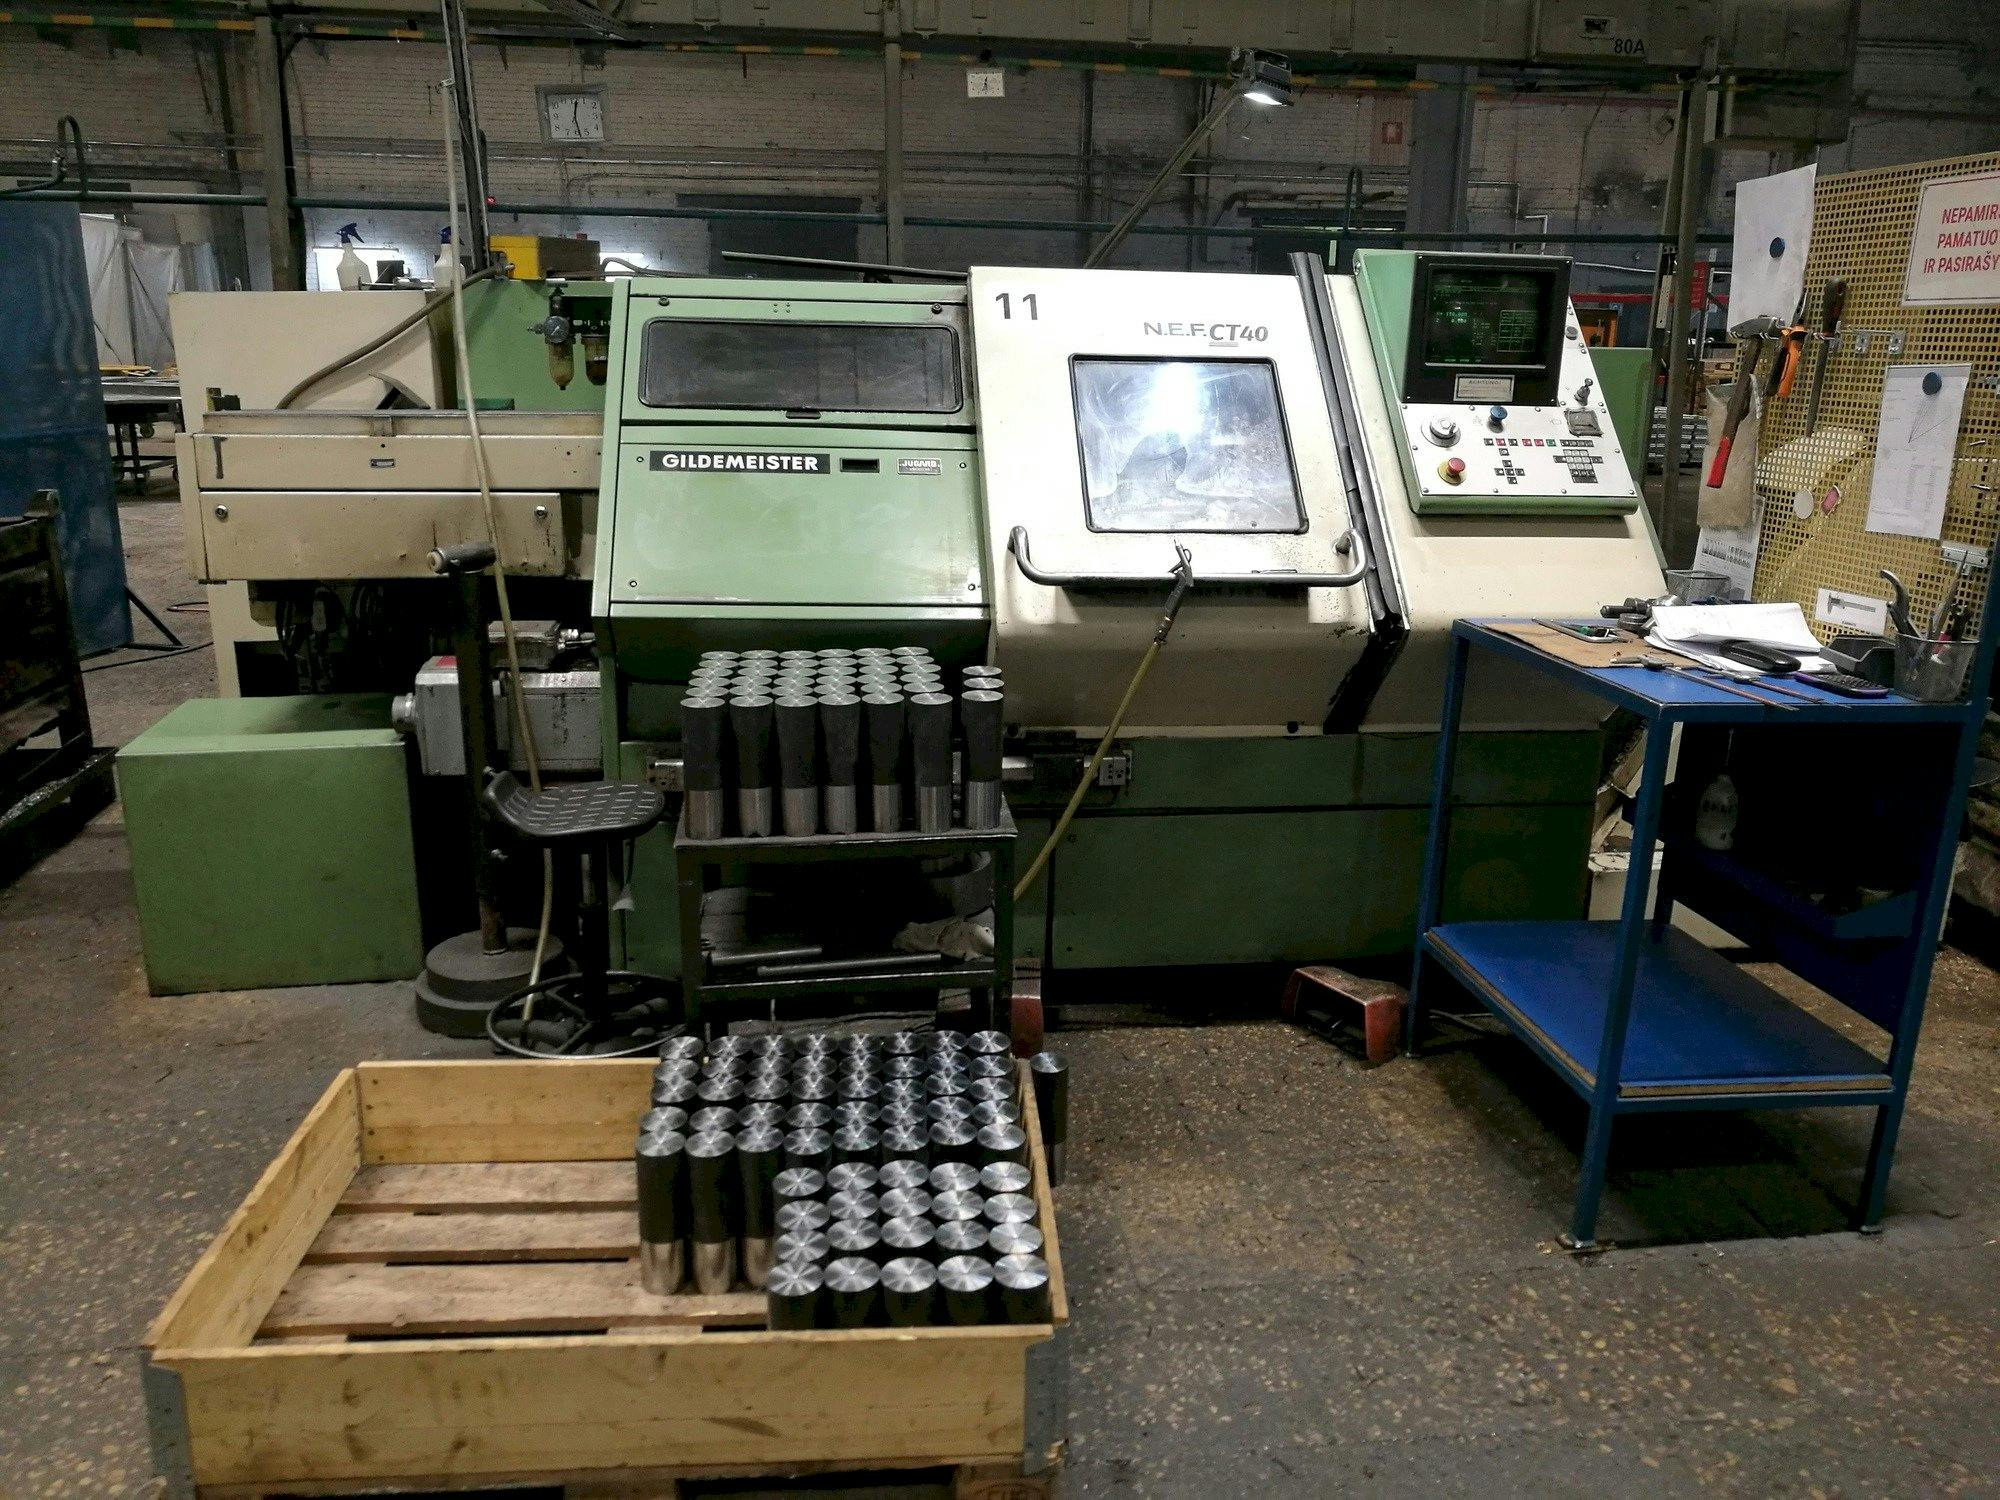 Front view of Gildemeister NEF CT 40  machine